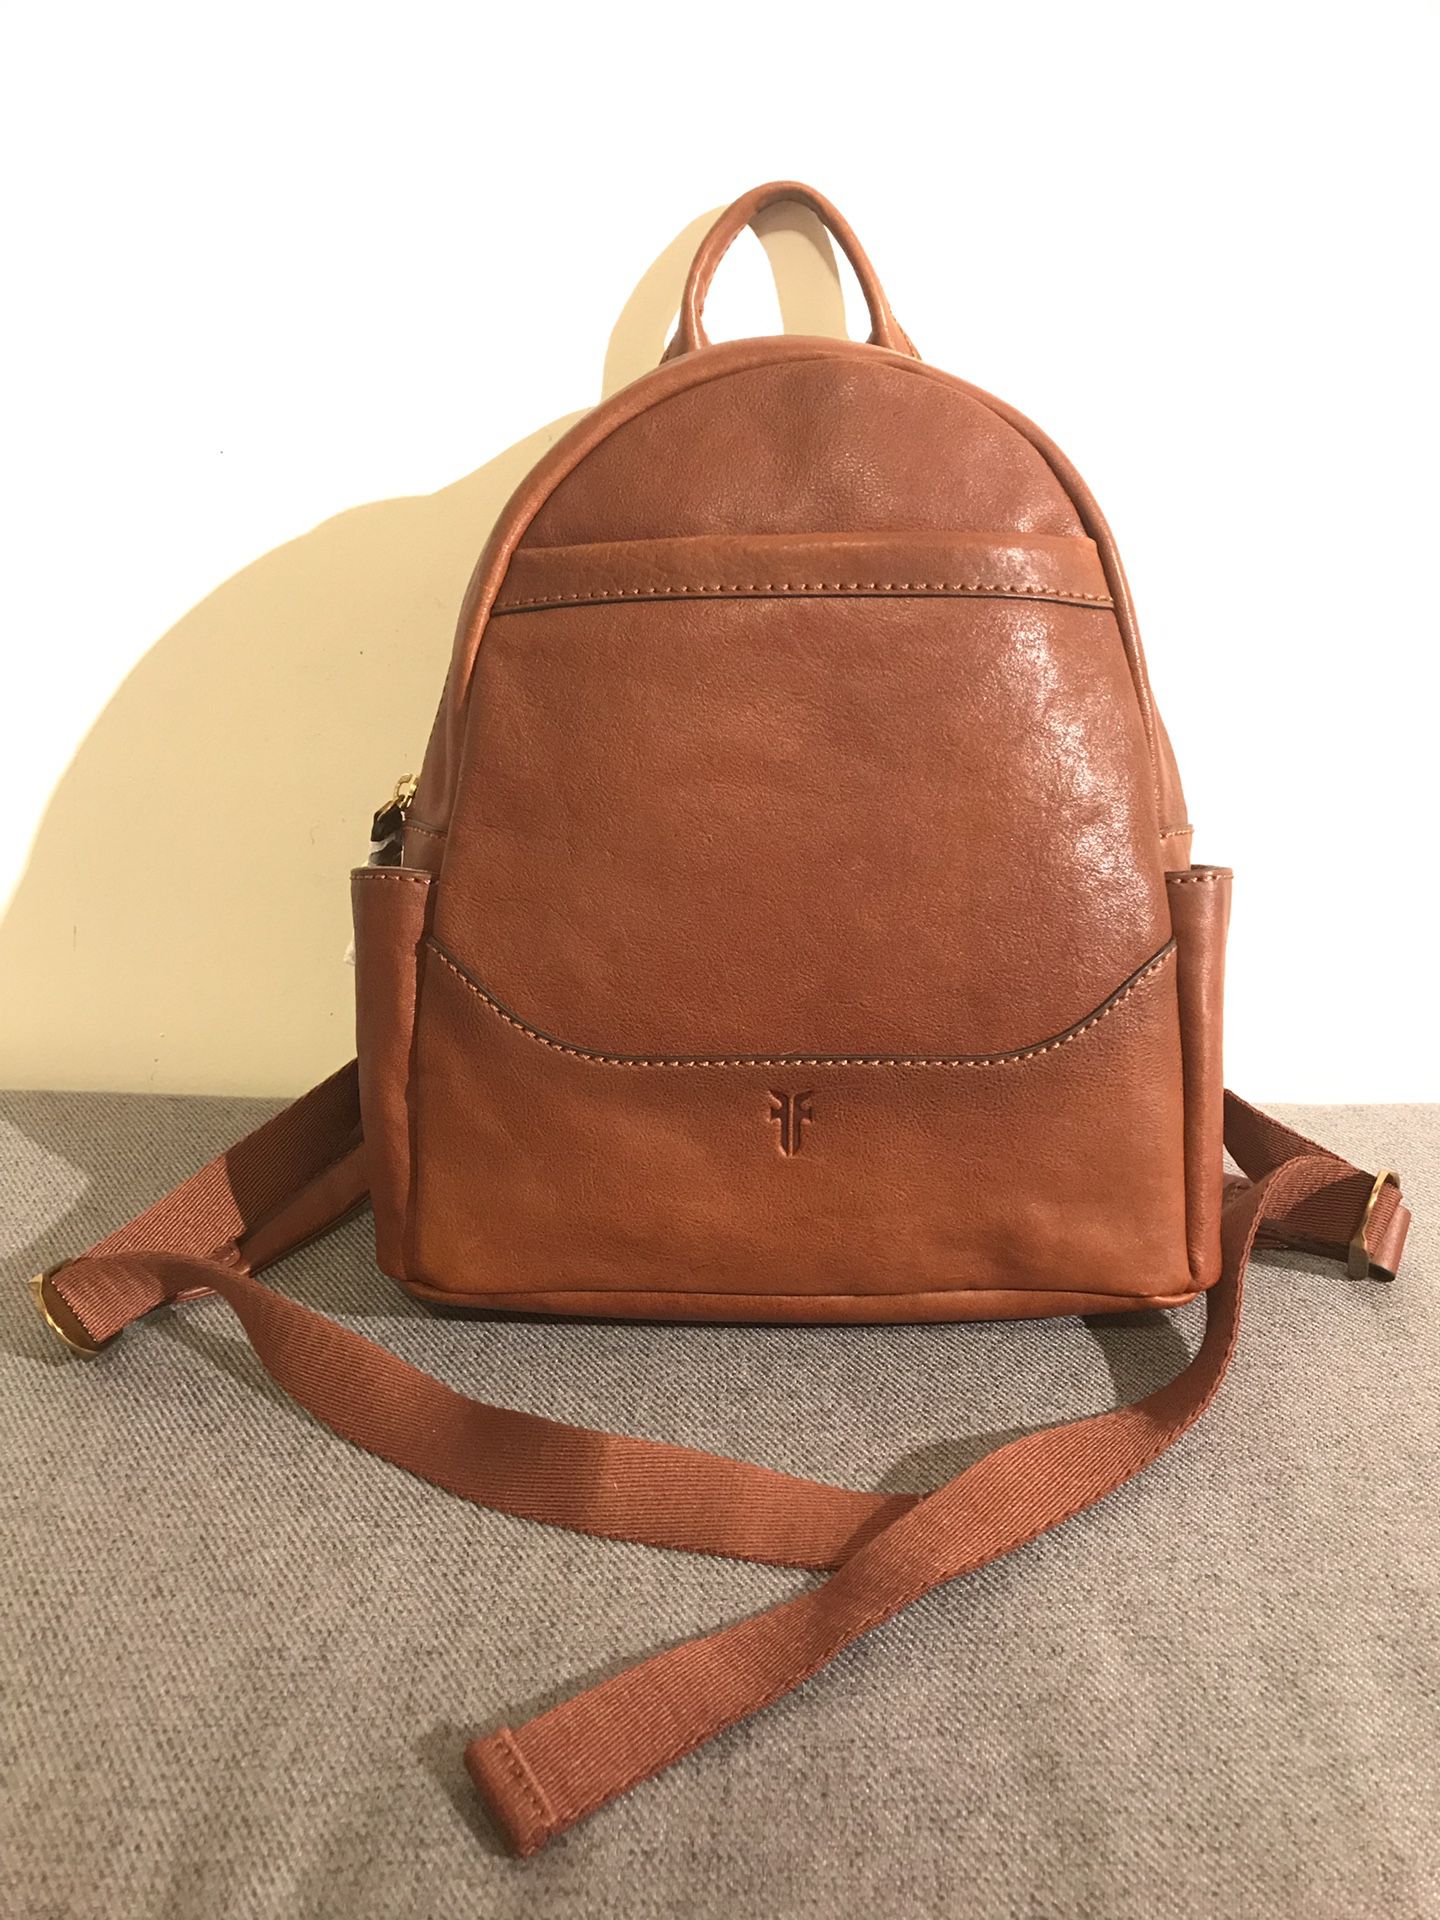 Authentic Frye Mini Backpack - Cognac Brown